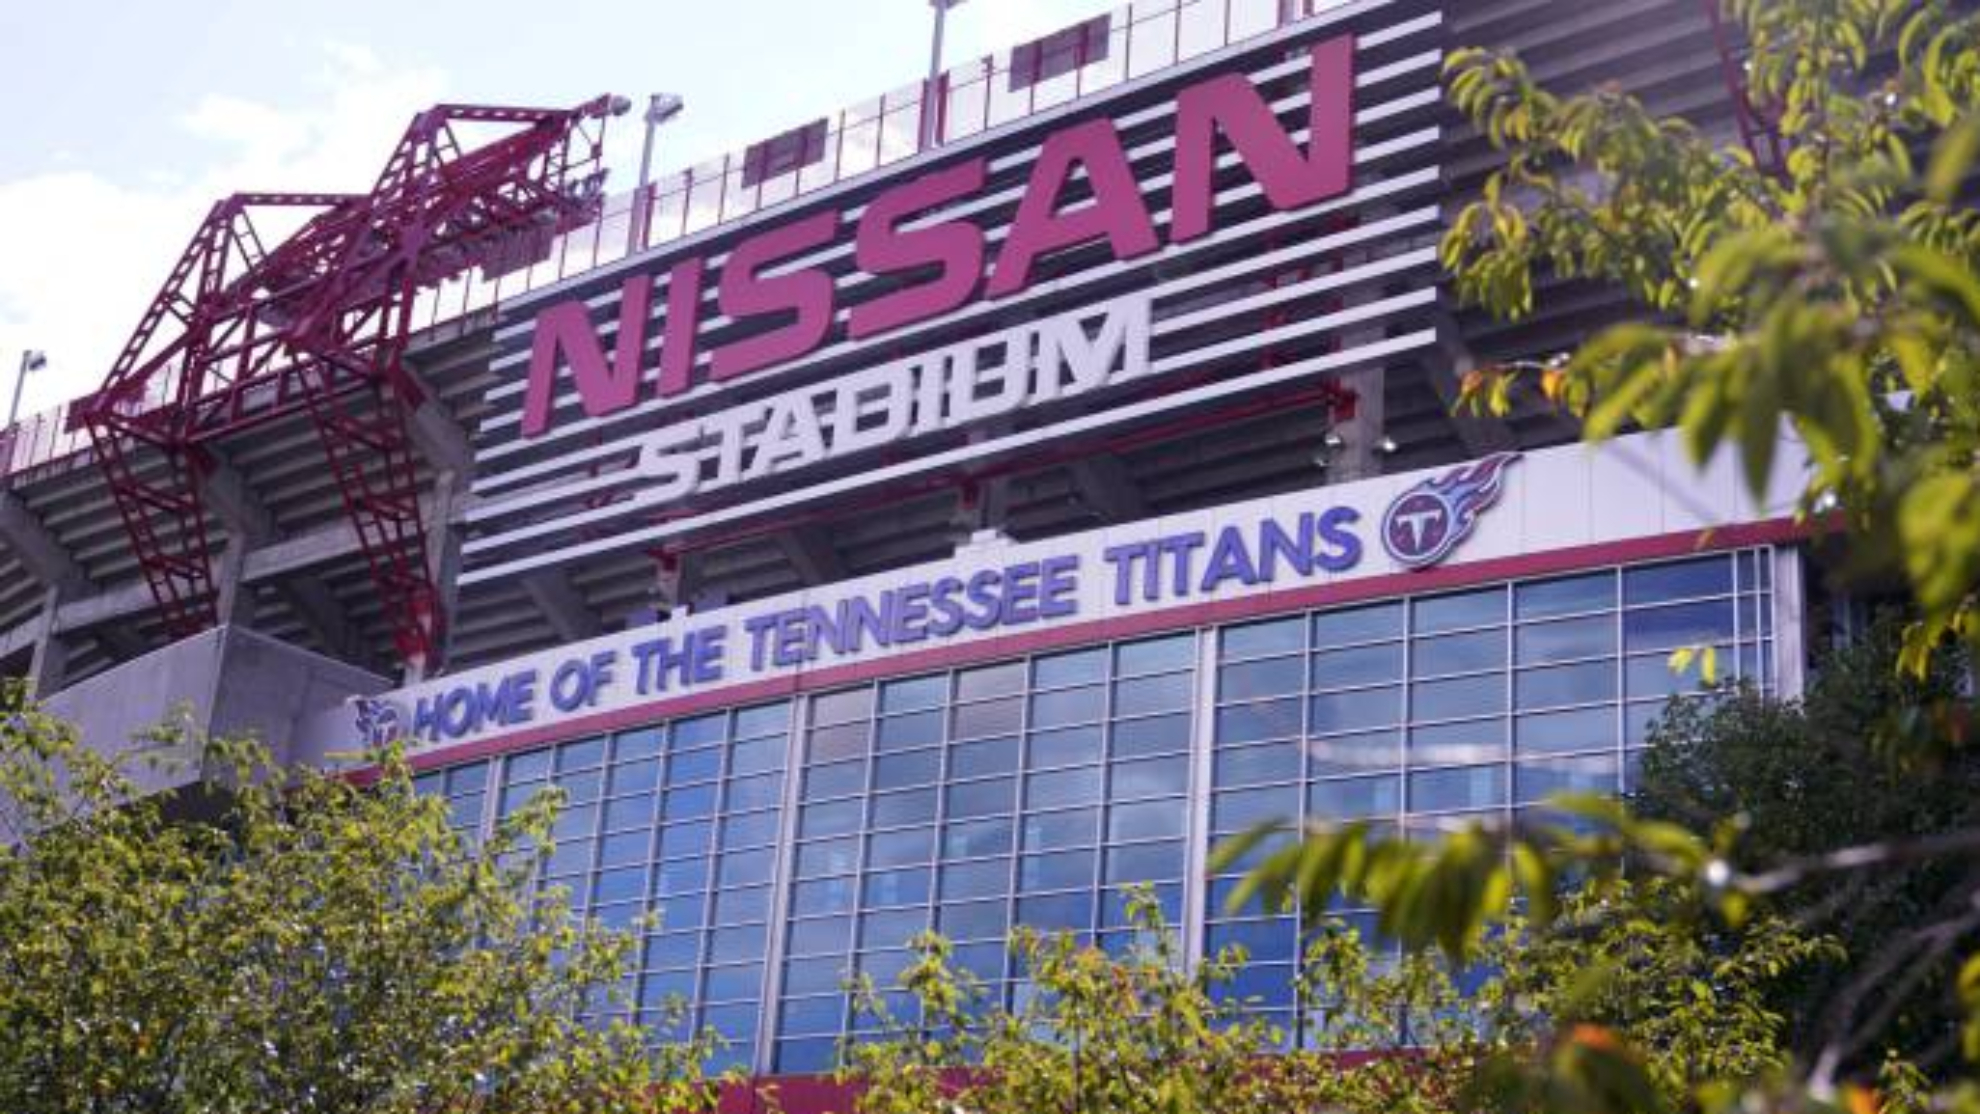 Nissan Stadium.